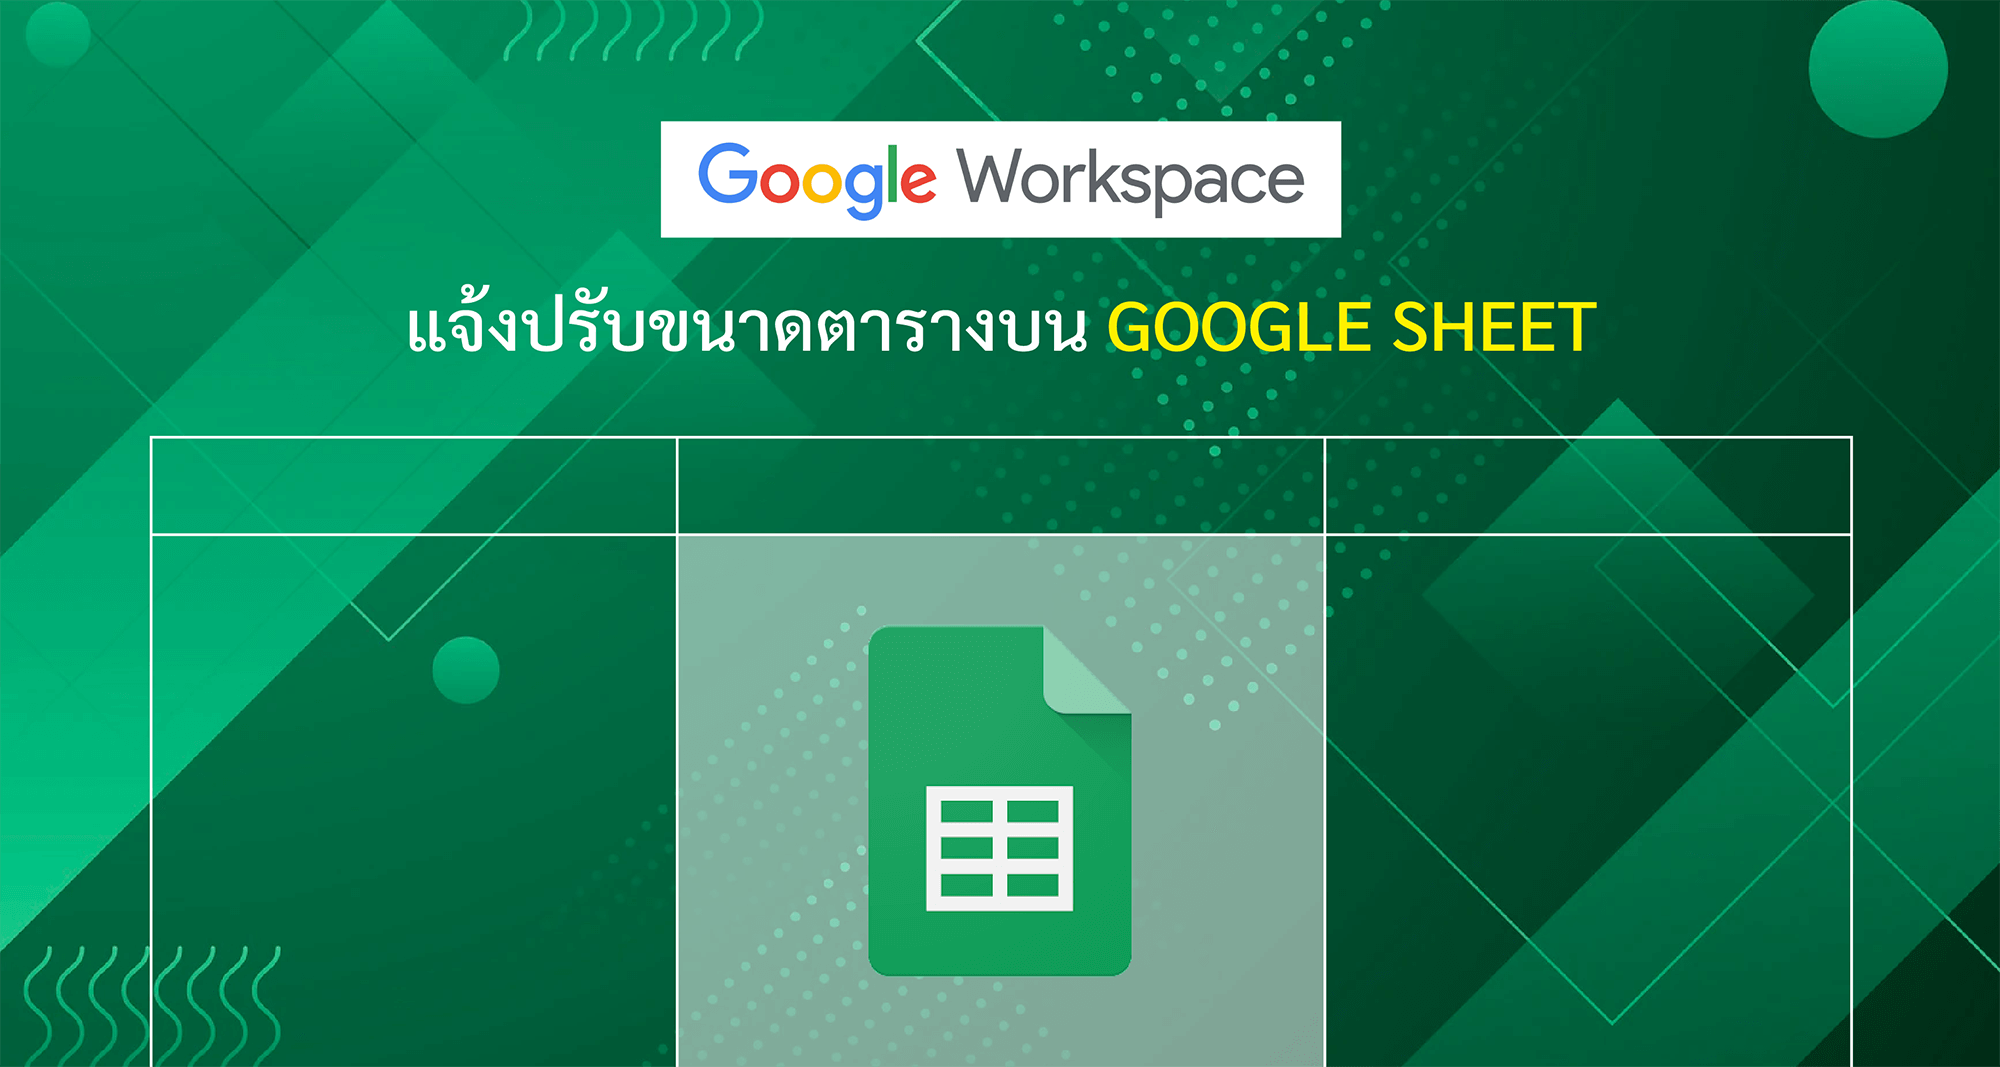 Google Workspace แจ้งปรับขนาดตารางบน Google Sheet